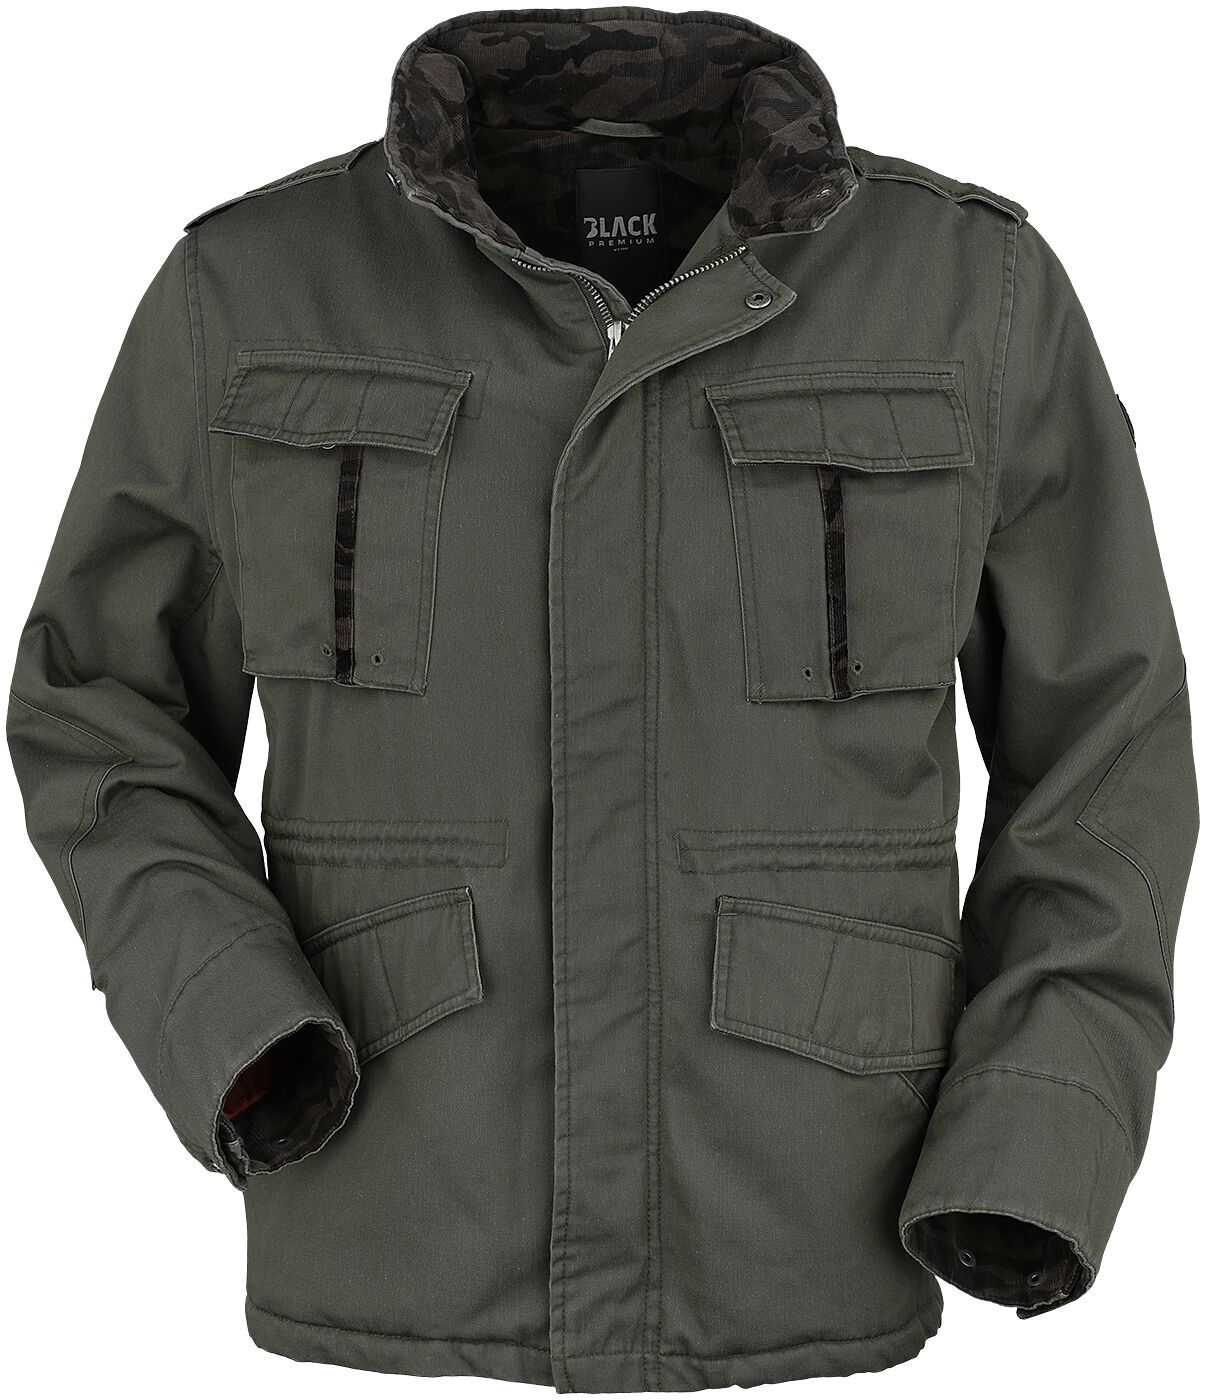 Black Premium by EMP Jacket with hidden hood Winterjacke oliv olivcamo in L